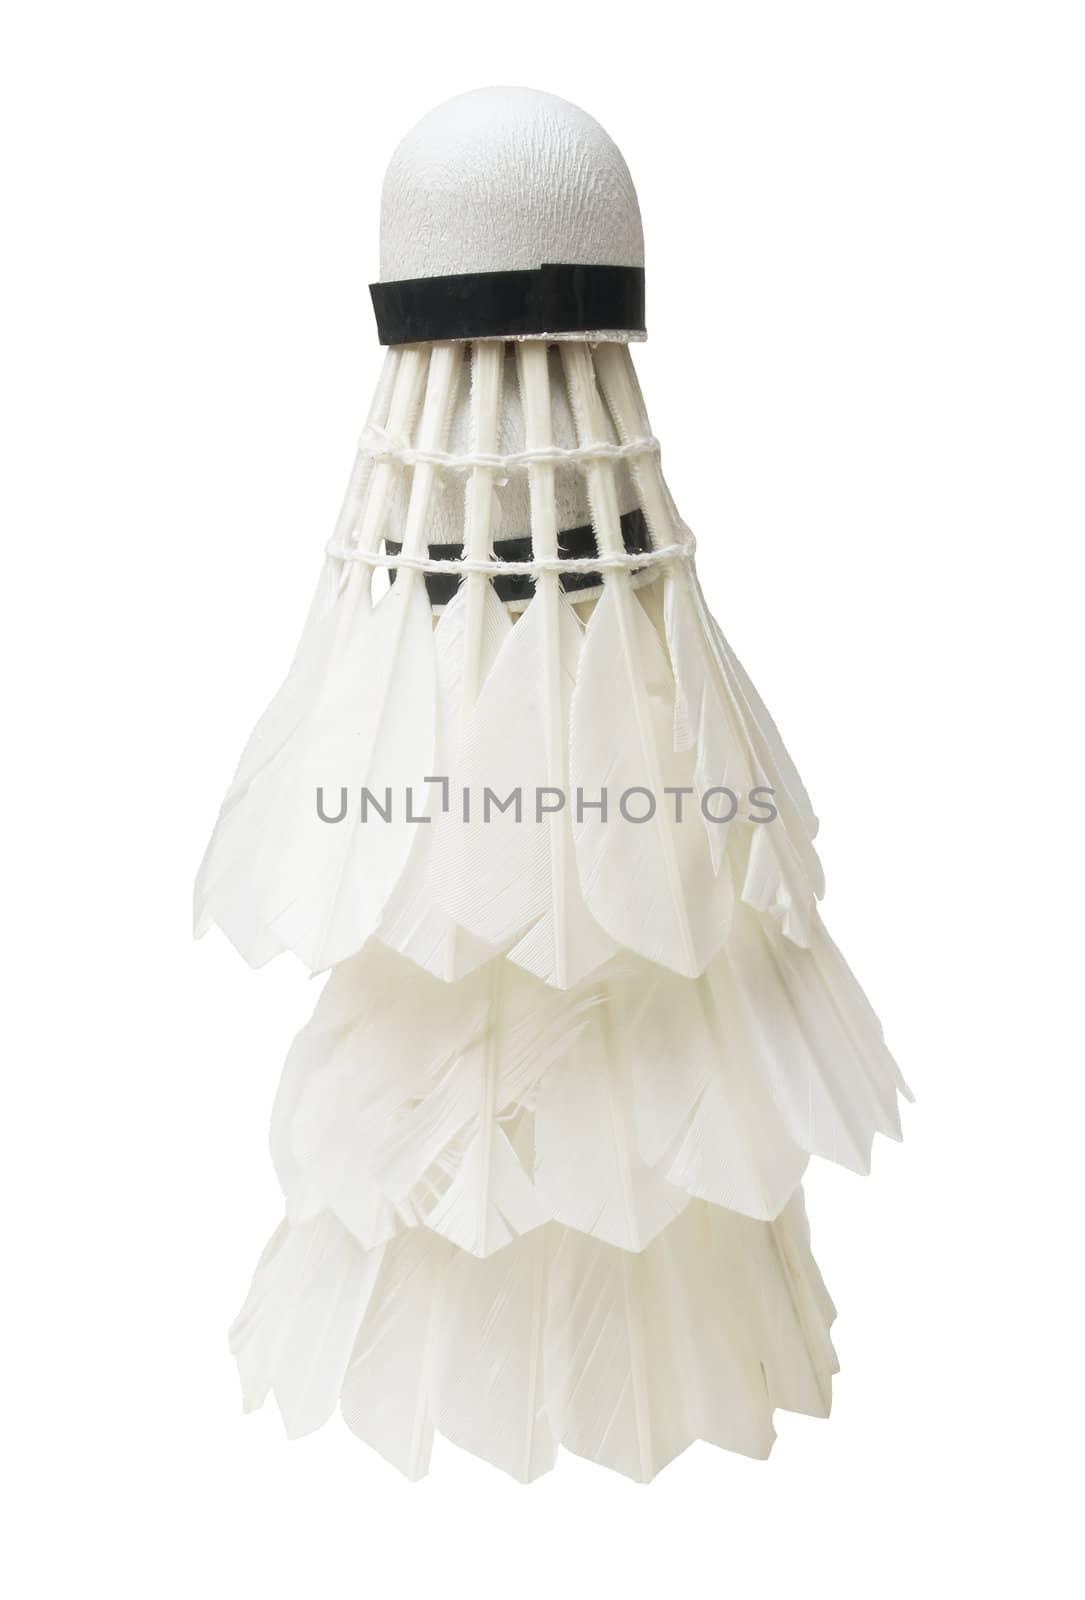 Vertical stack of badminton shuttlecocks isolated on white background